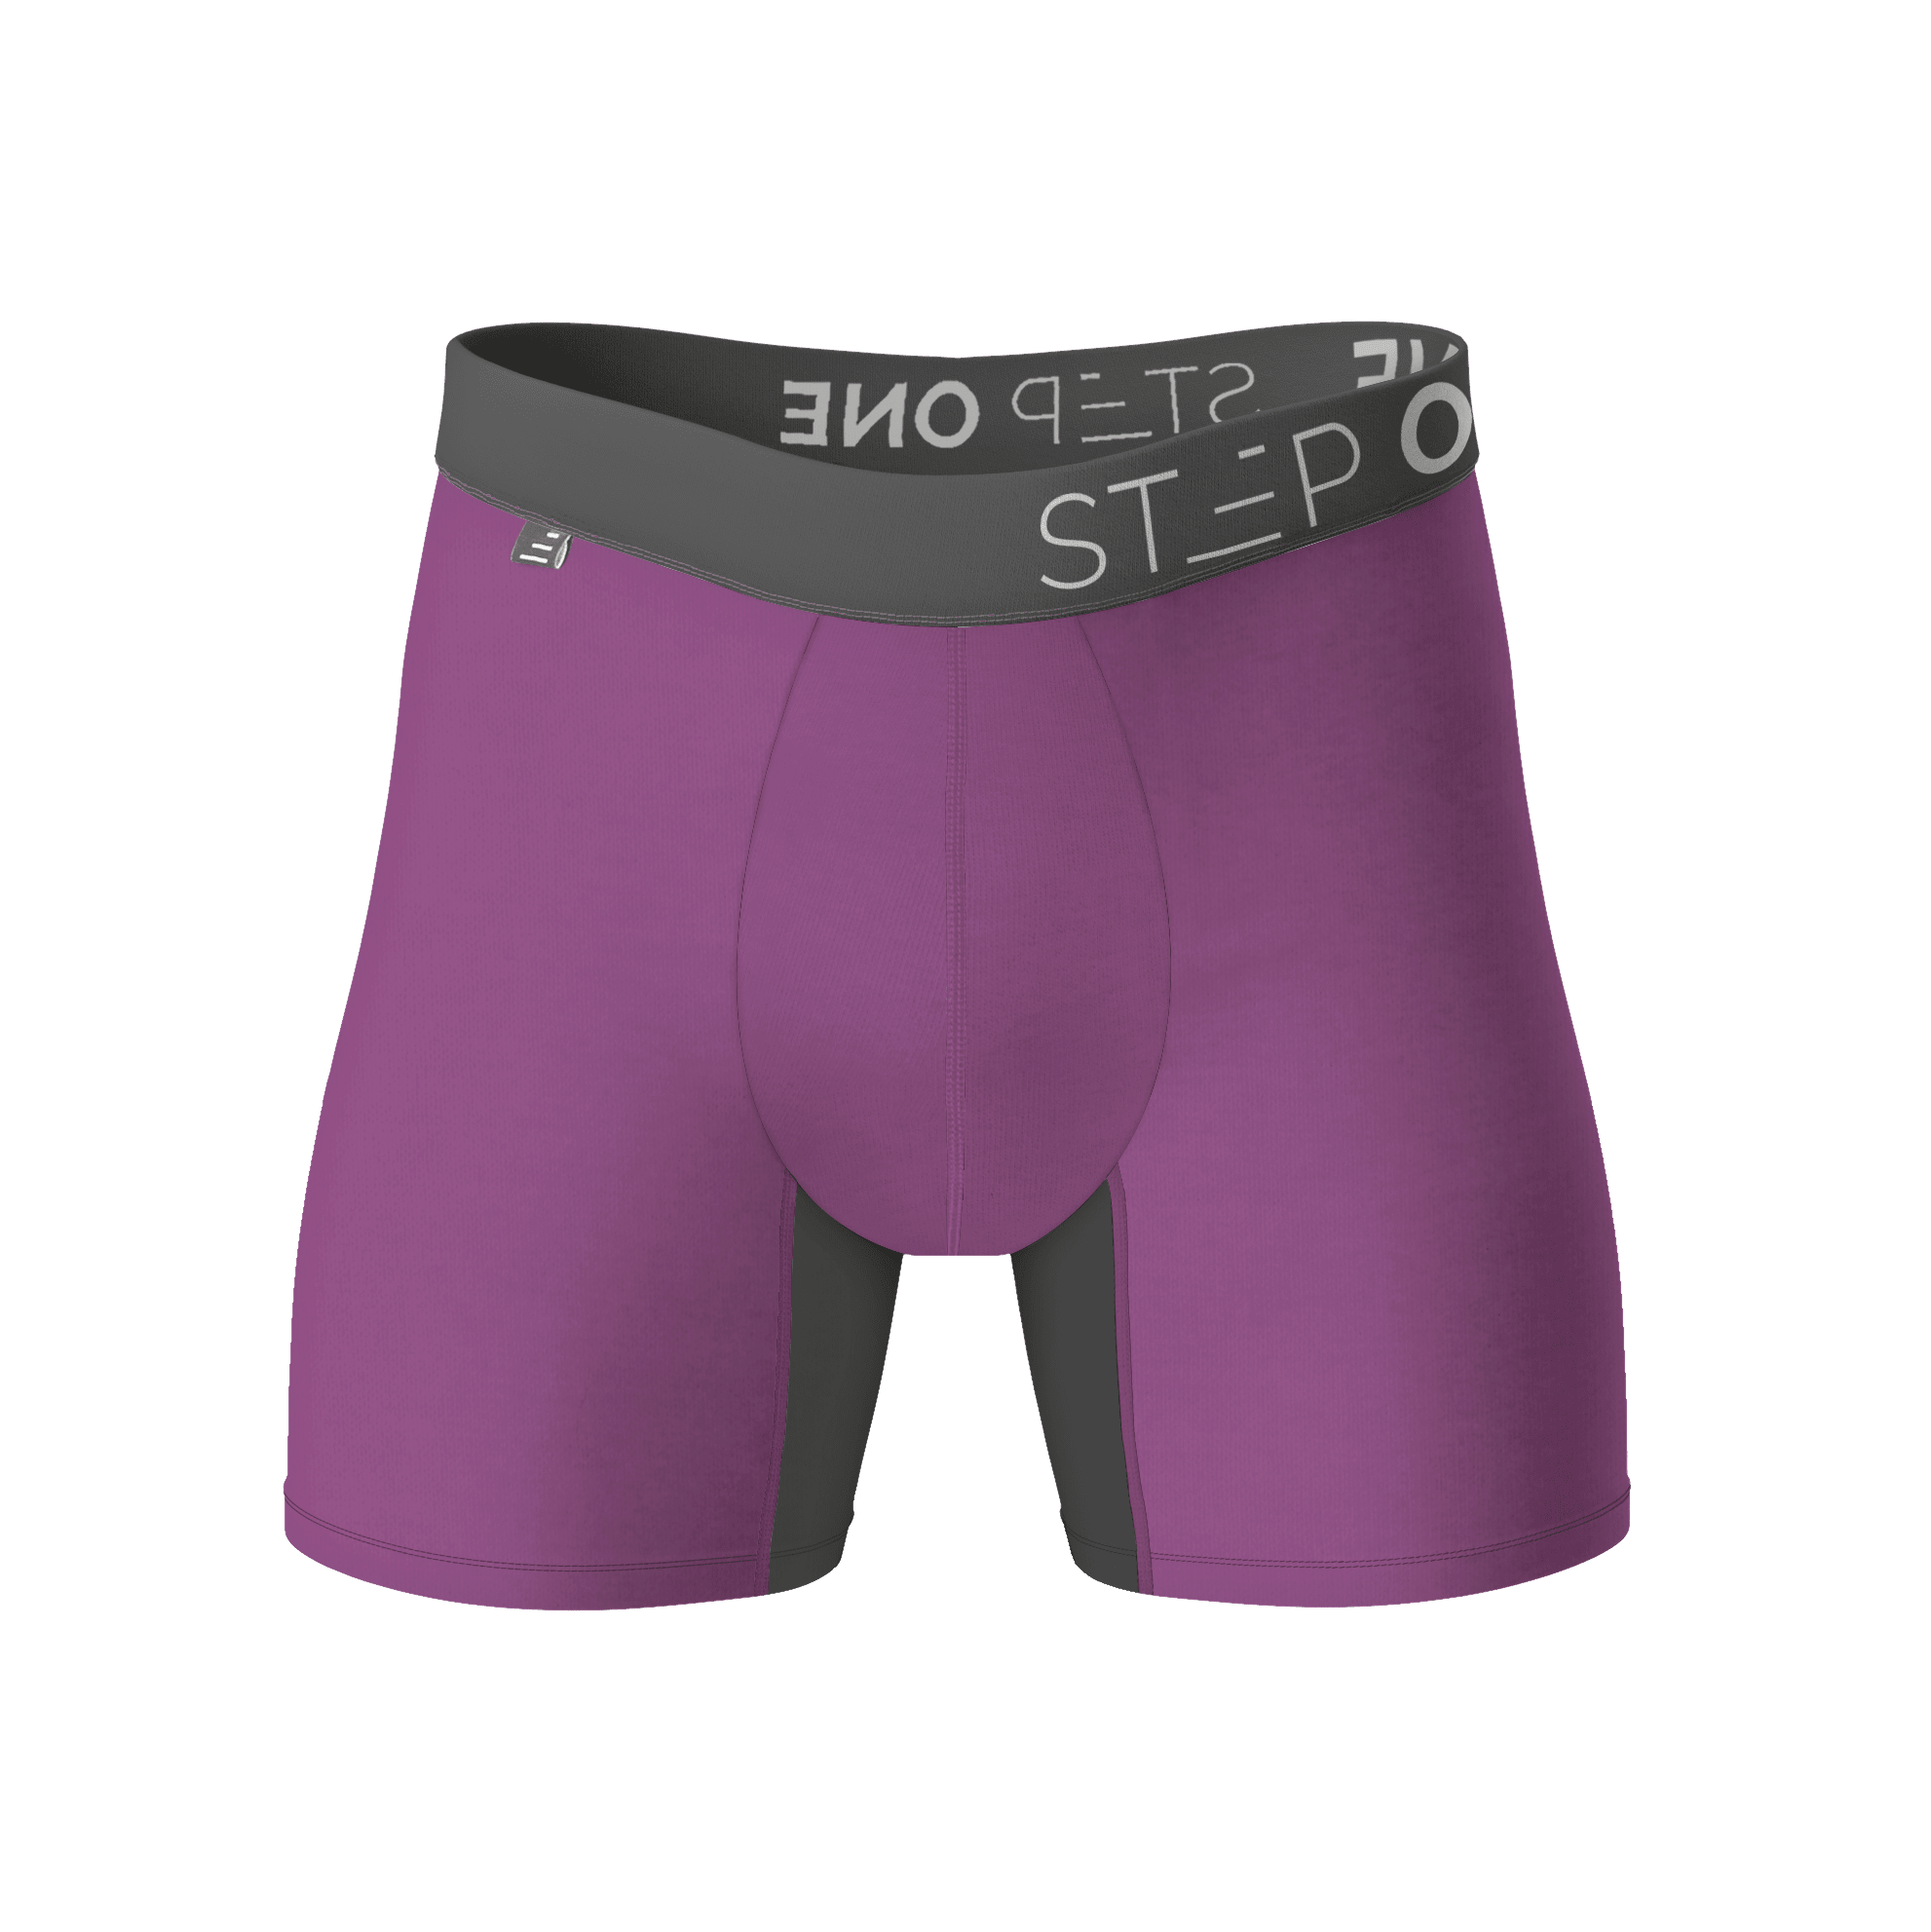 Boxer Brief - Juicy Plums  Step One Men's Bamboo Underwear